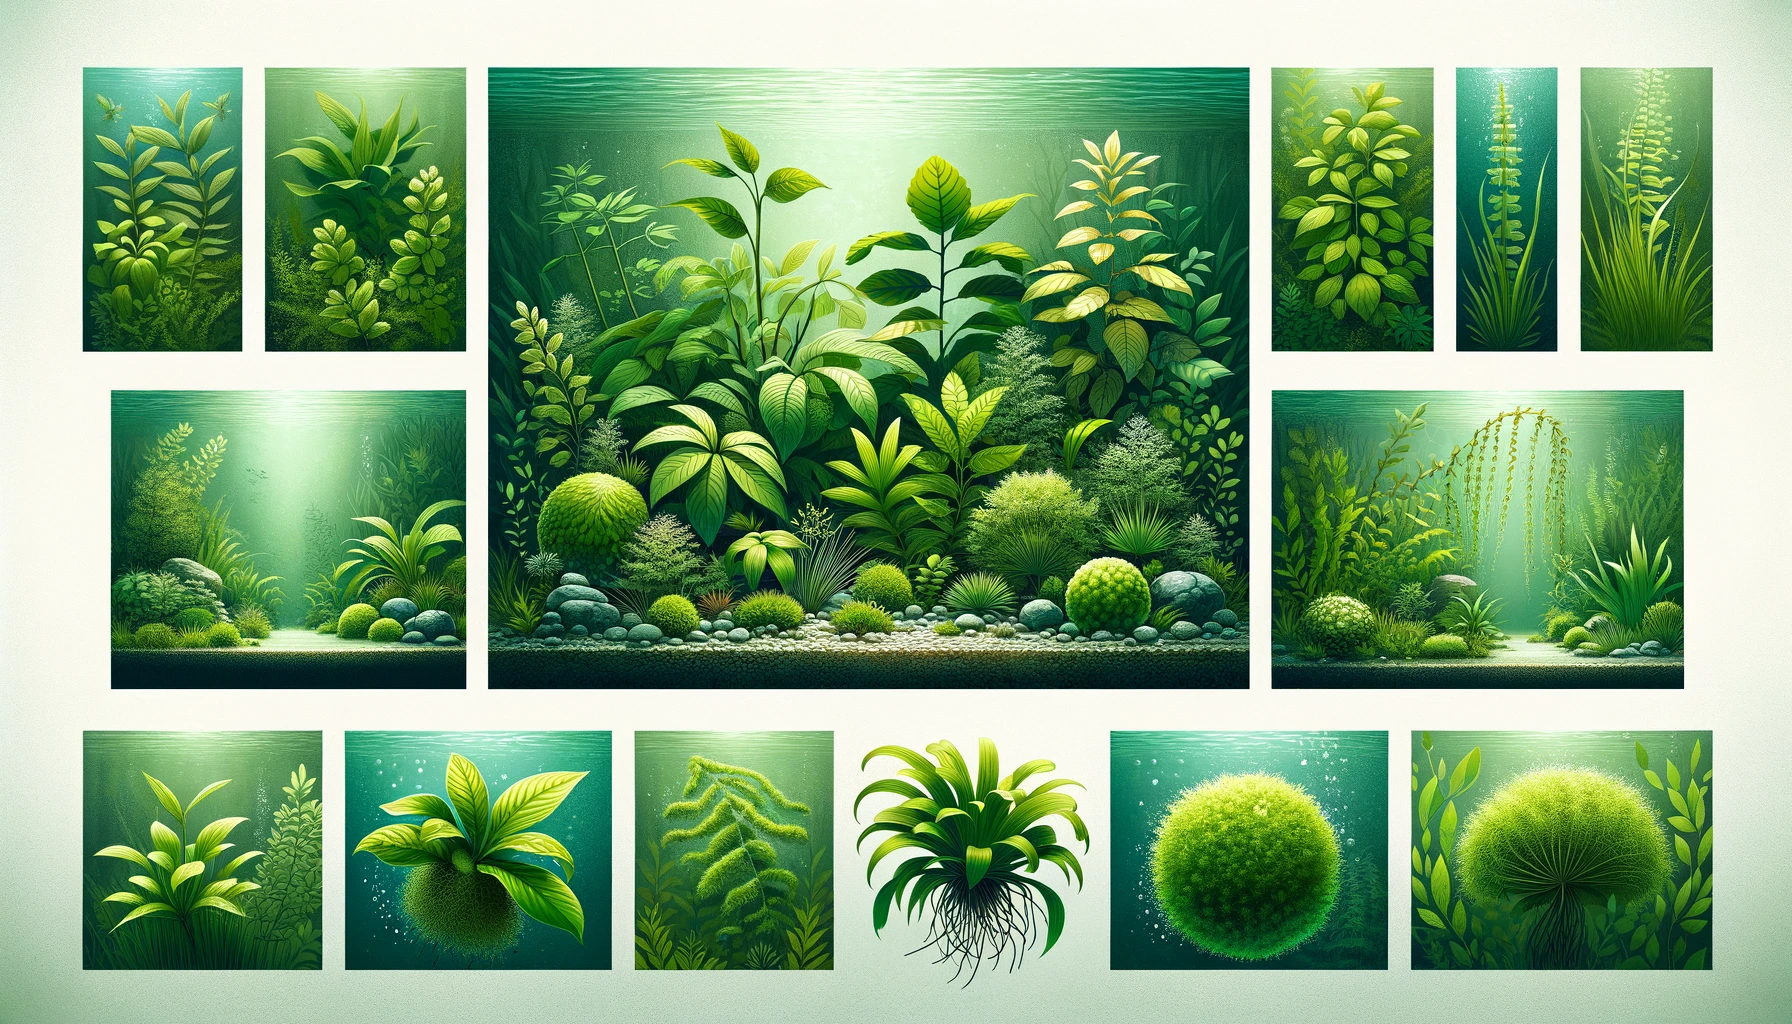 Aquarium plants that do not need co2